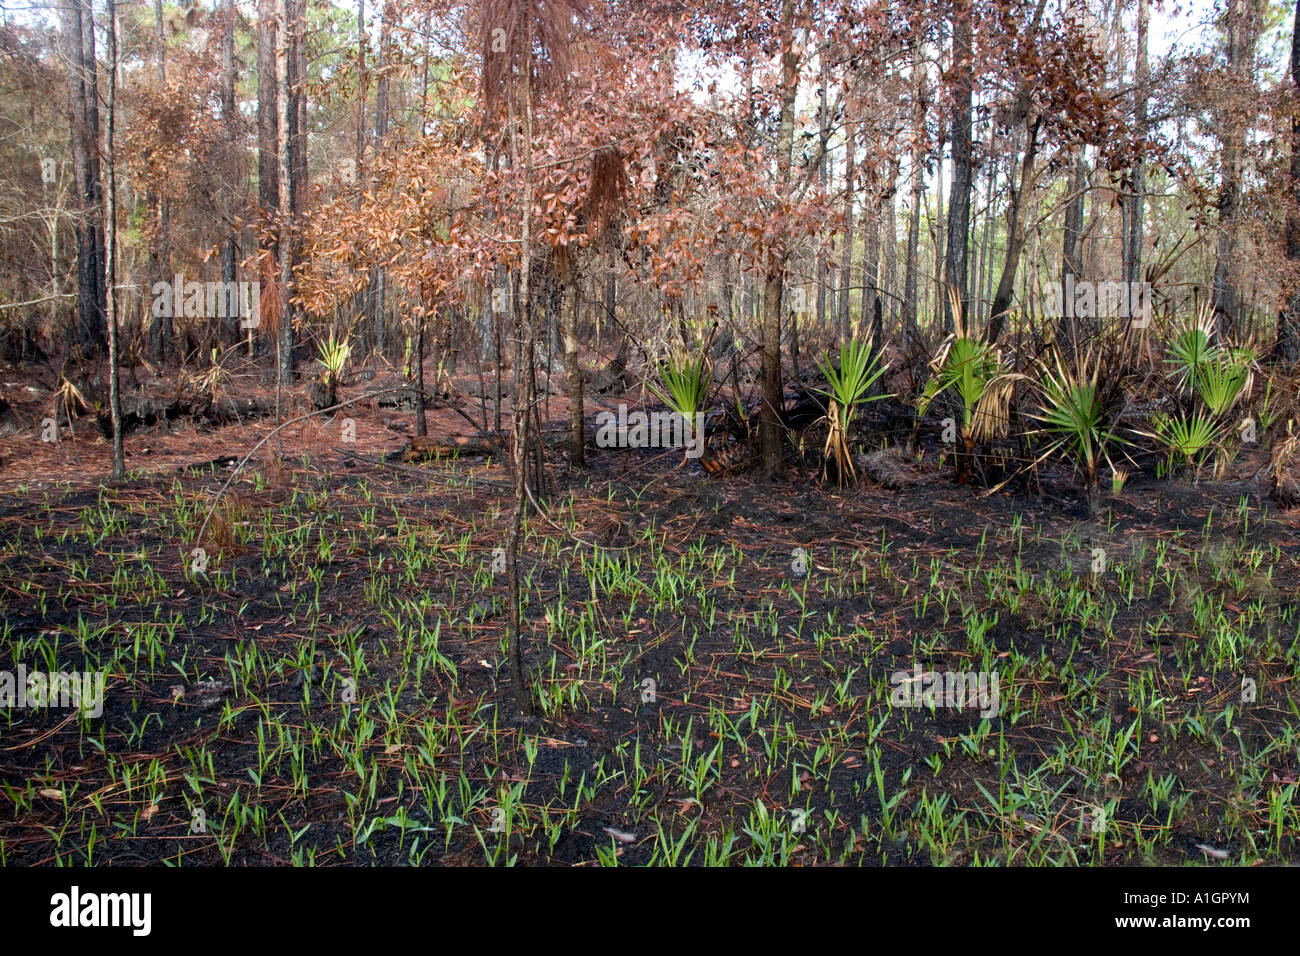 Controlled prescribed burn, new grass emerging, Florida Stock Photo